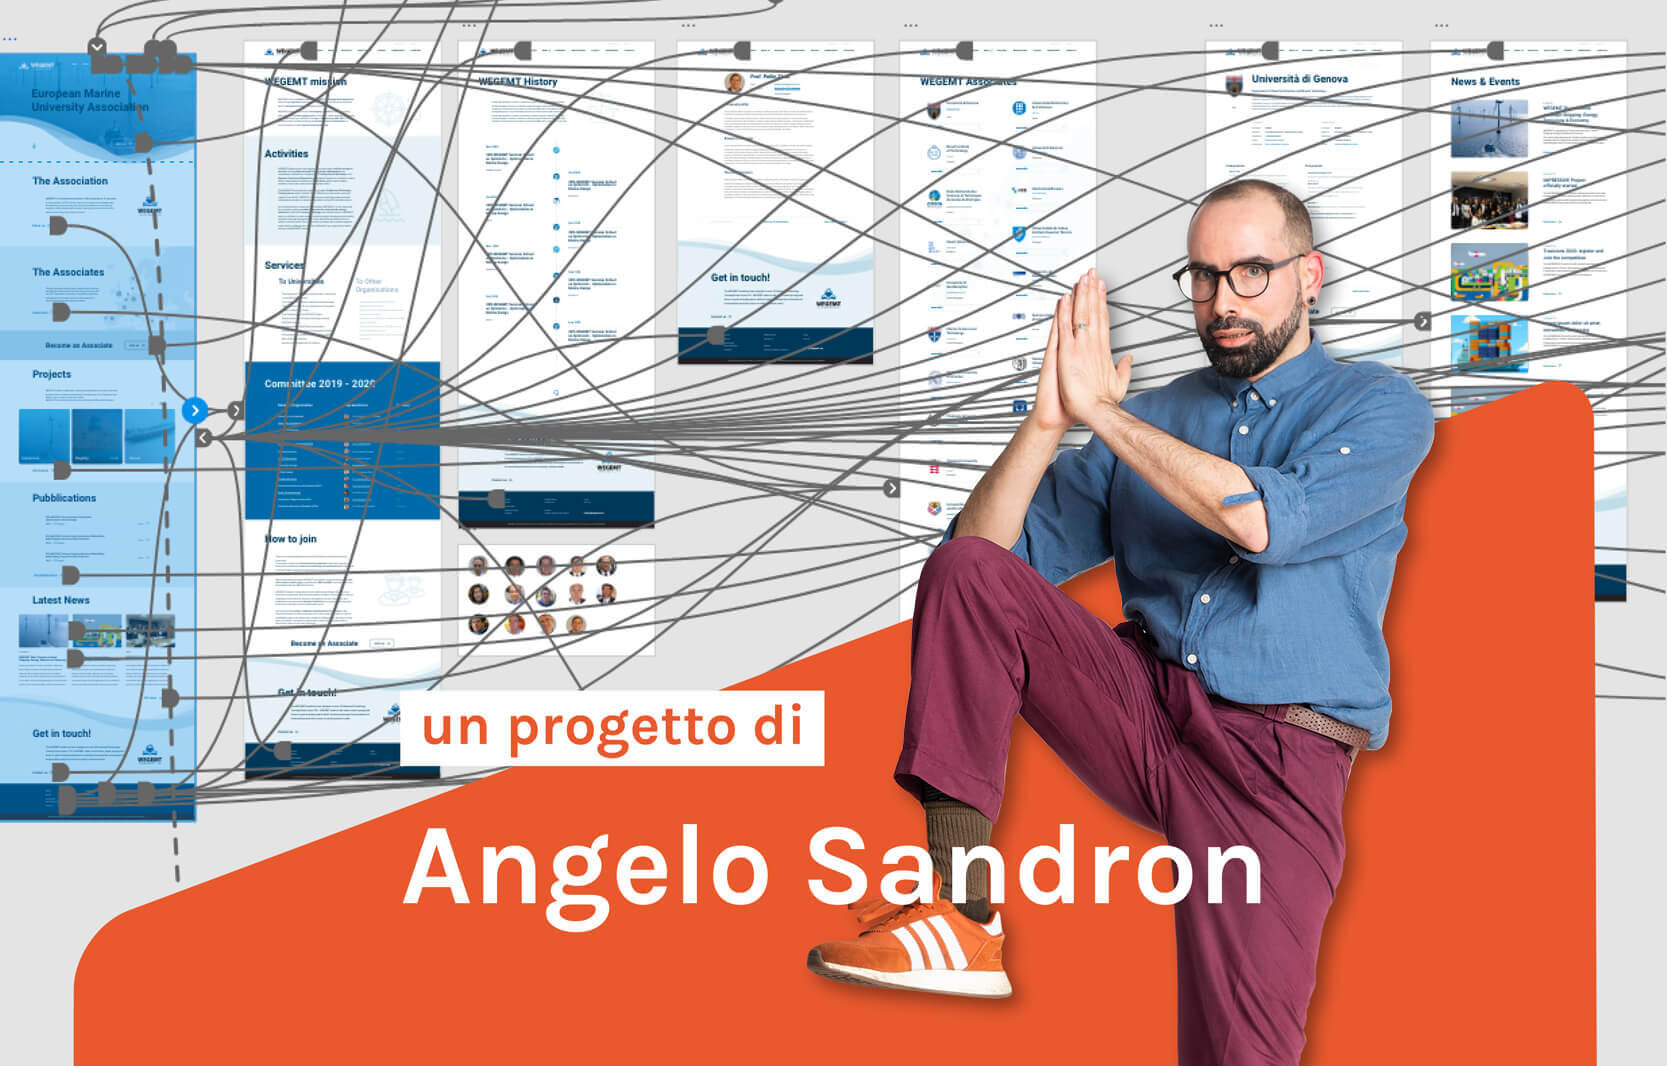 Angelo Sandron Wegemt progetto web design